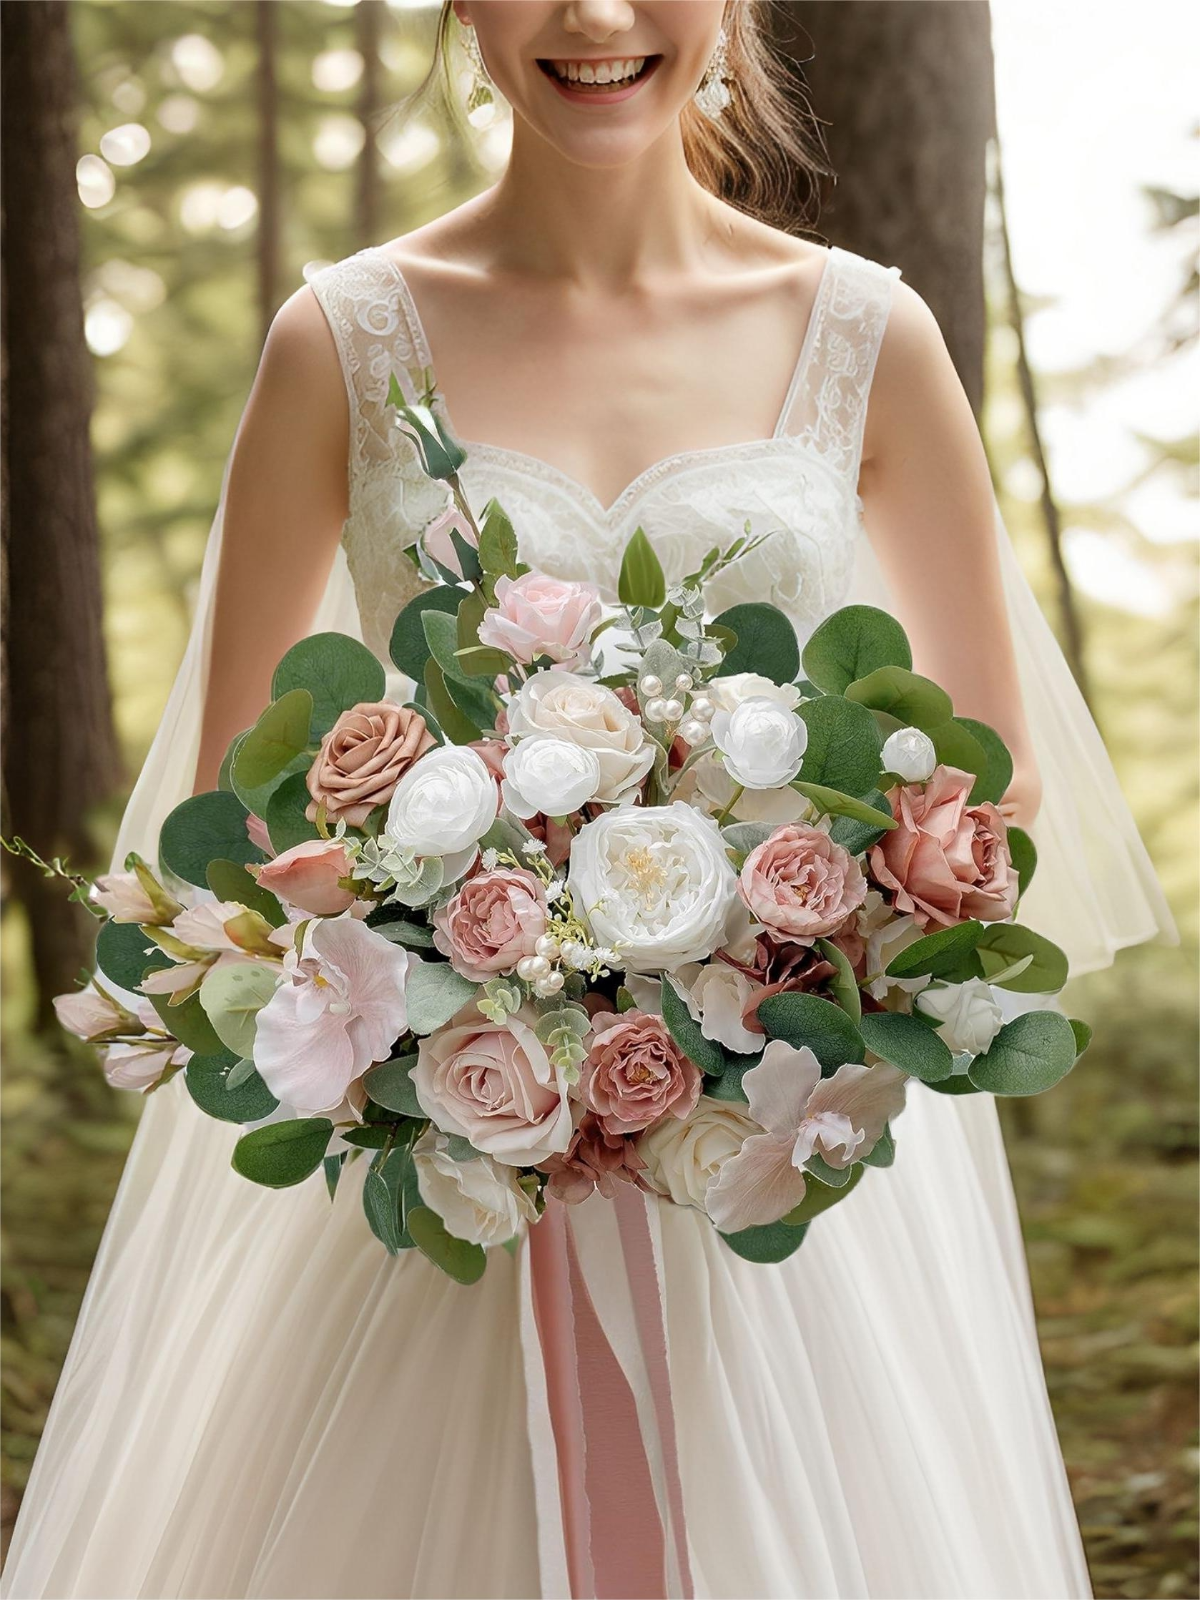 Dusty Rose 14“ Artificial Flower Wedding Bridal Bouquets SP2113